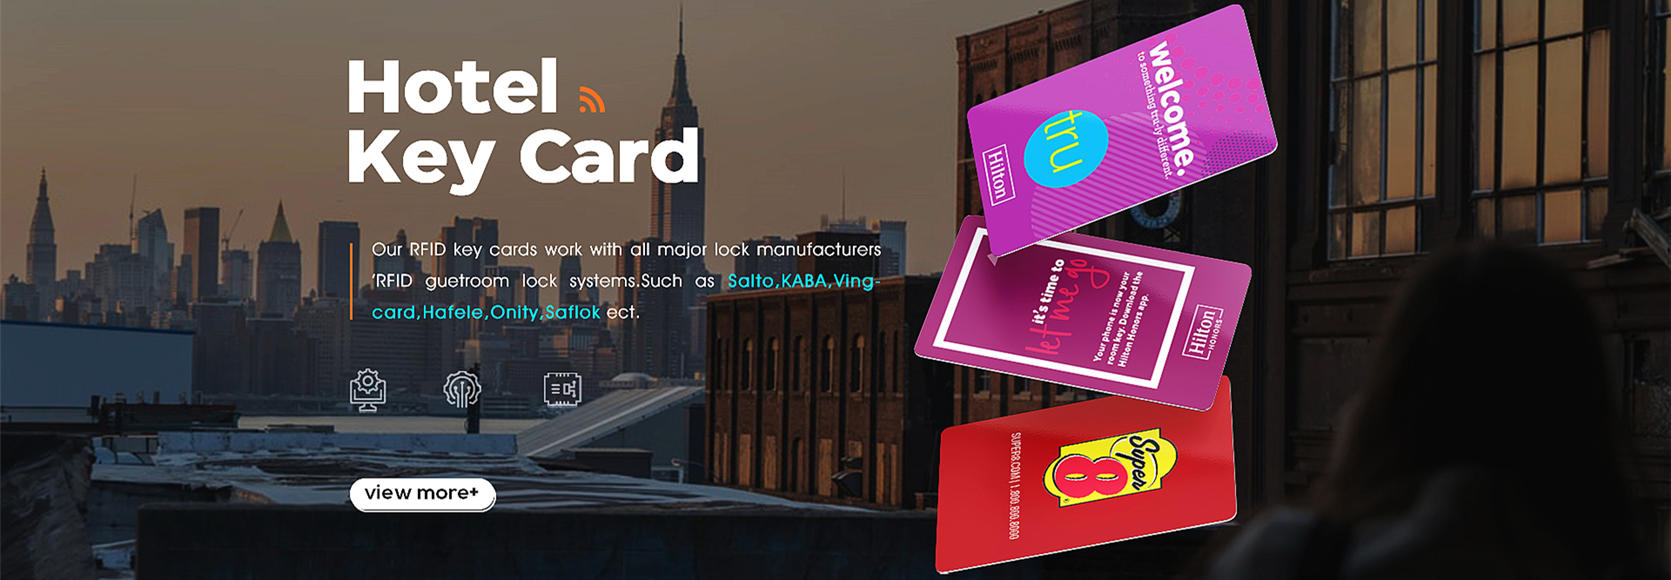 Salto,Kaba,Ving-card,Onity,YGS,Betech,Hotek,Hune,Benderly etc hotel keycards